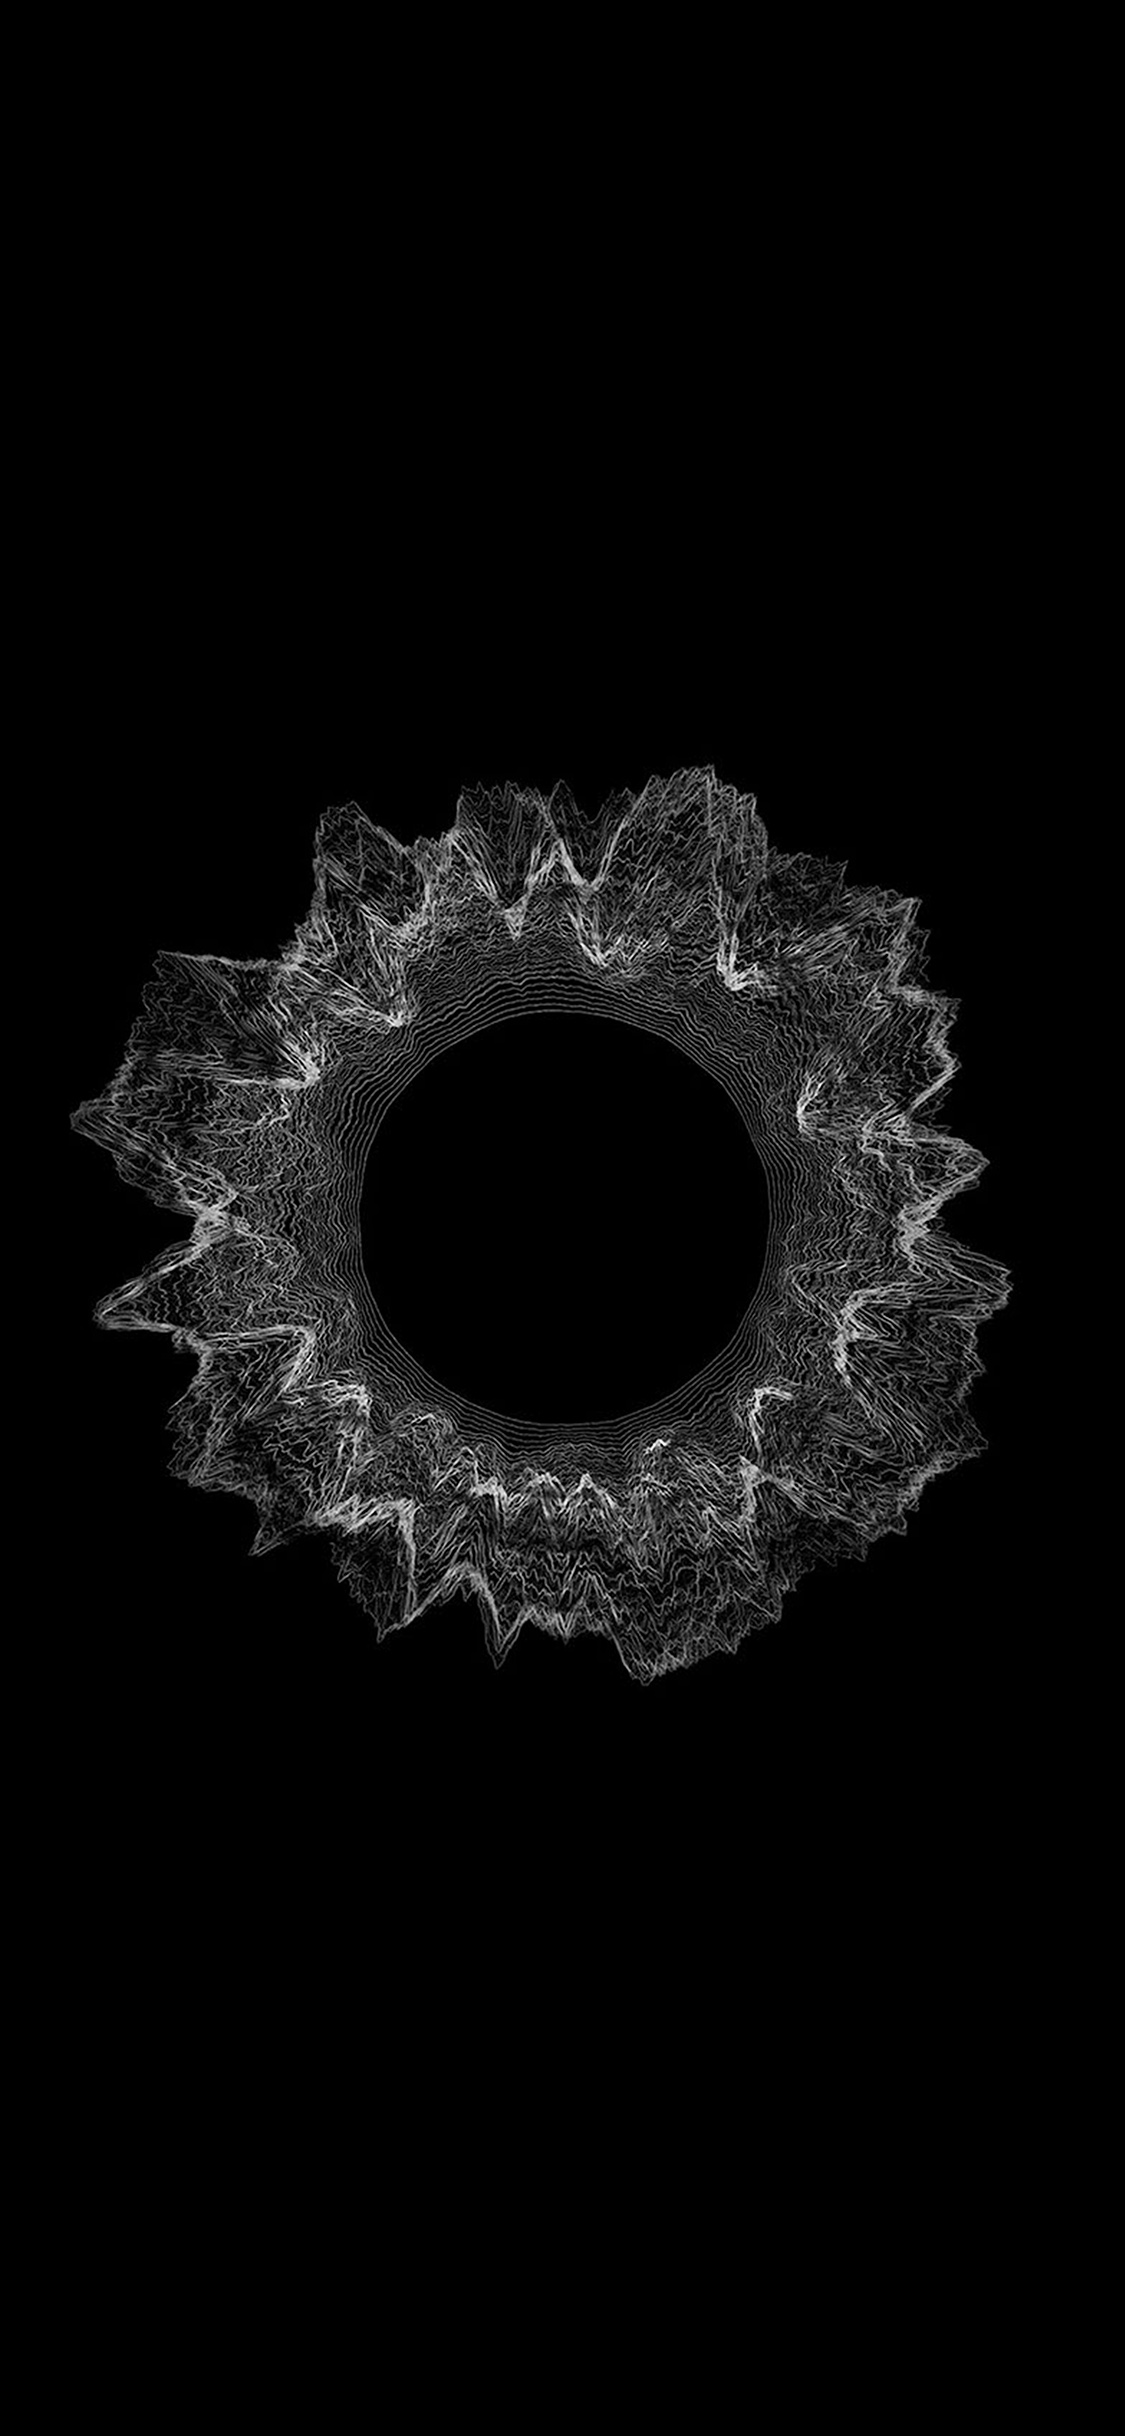 Dark Bw Circle Minimal Abstract Digital Art Pattern